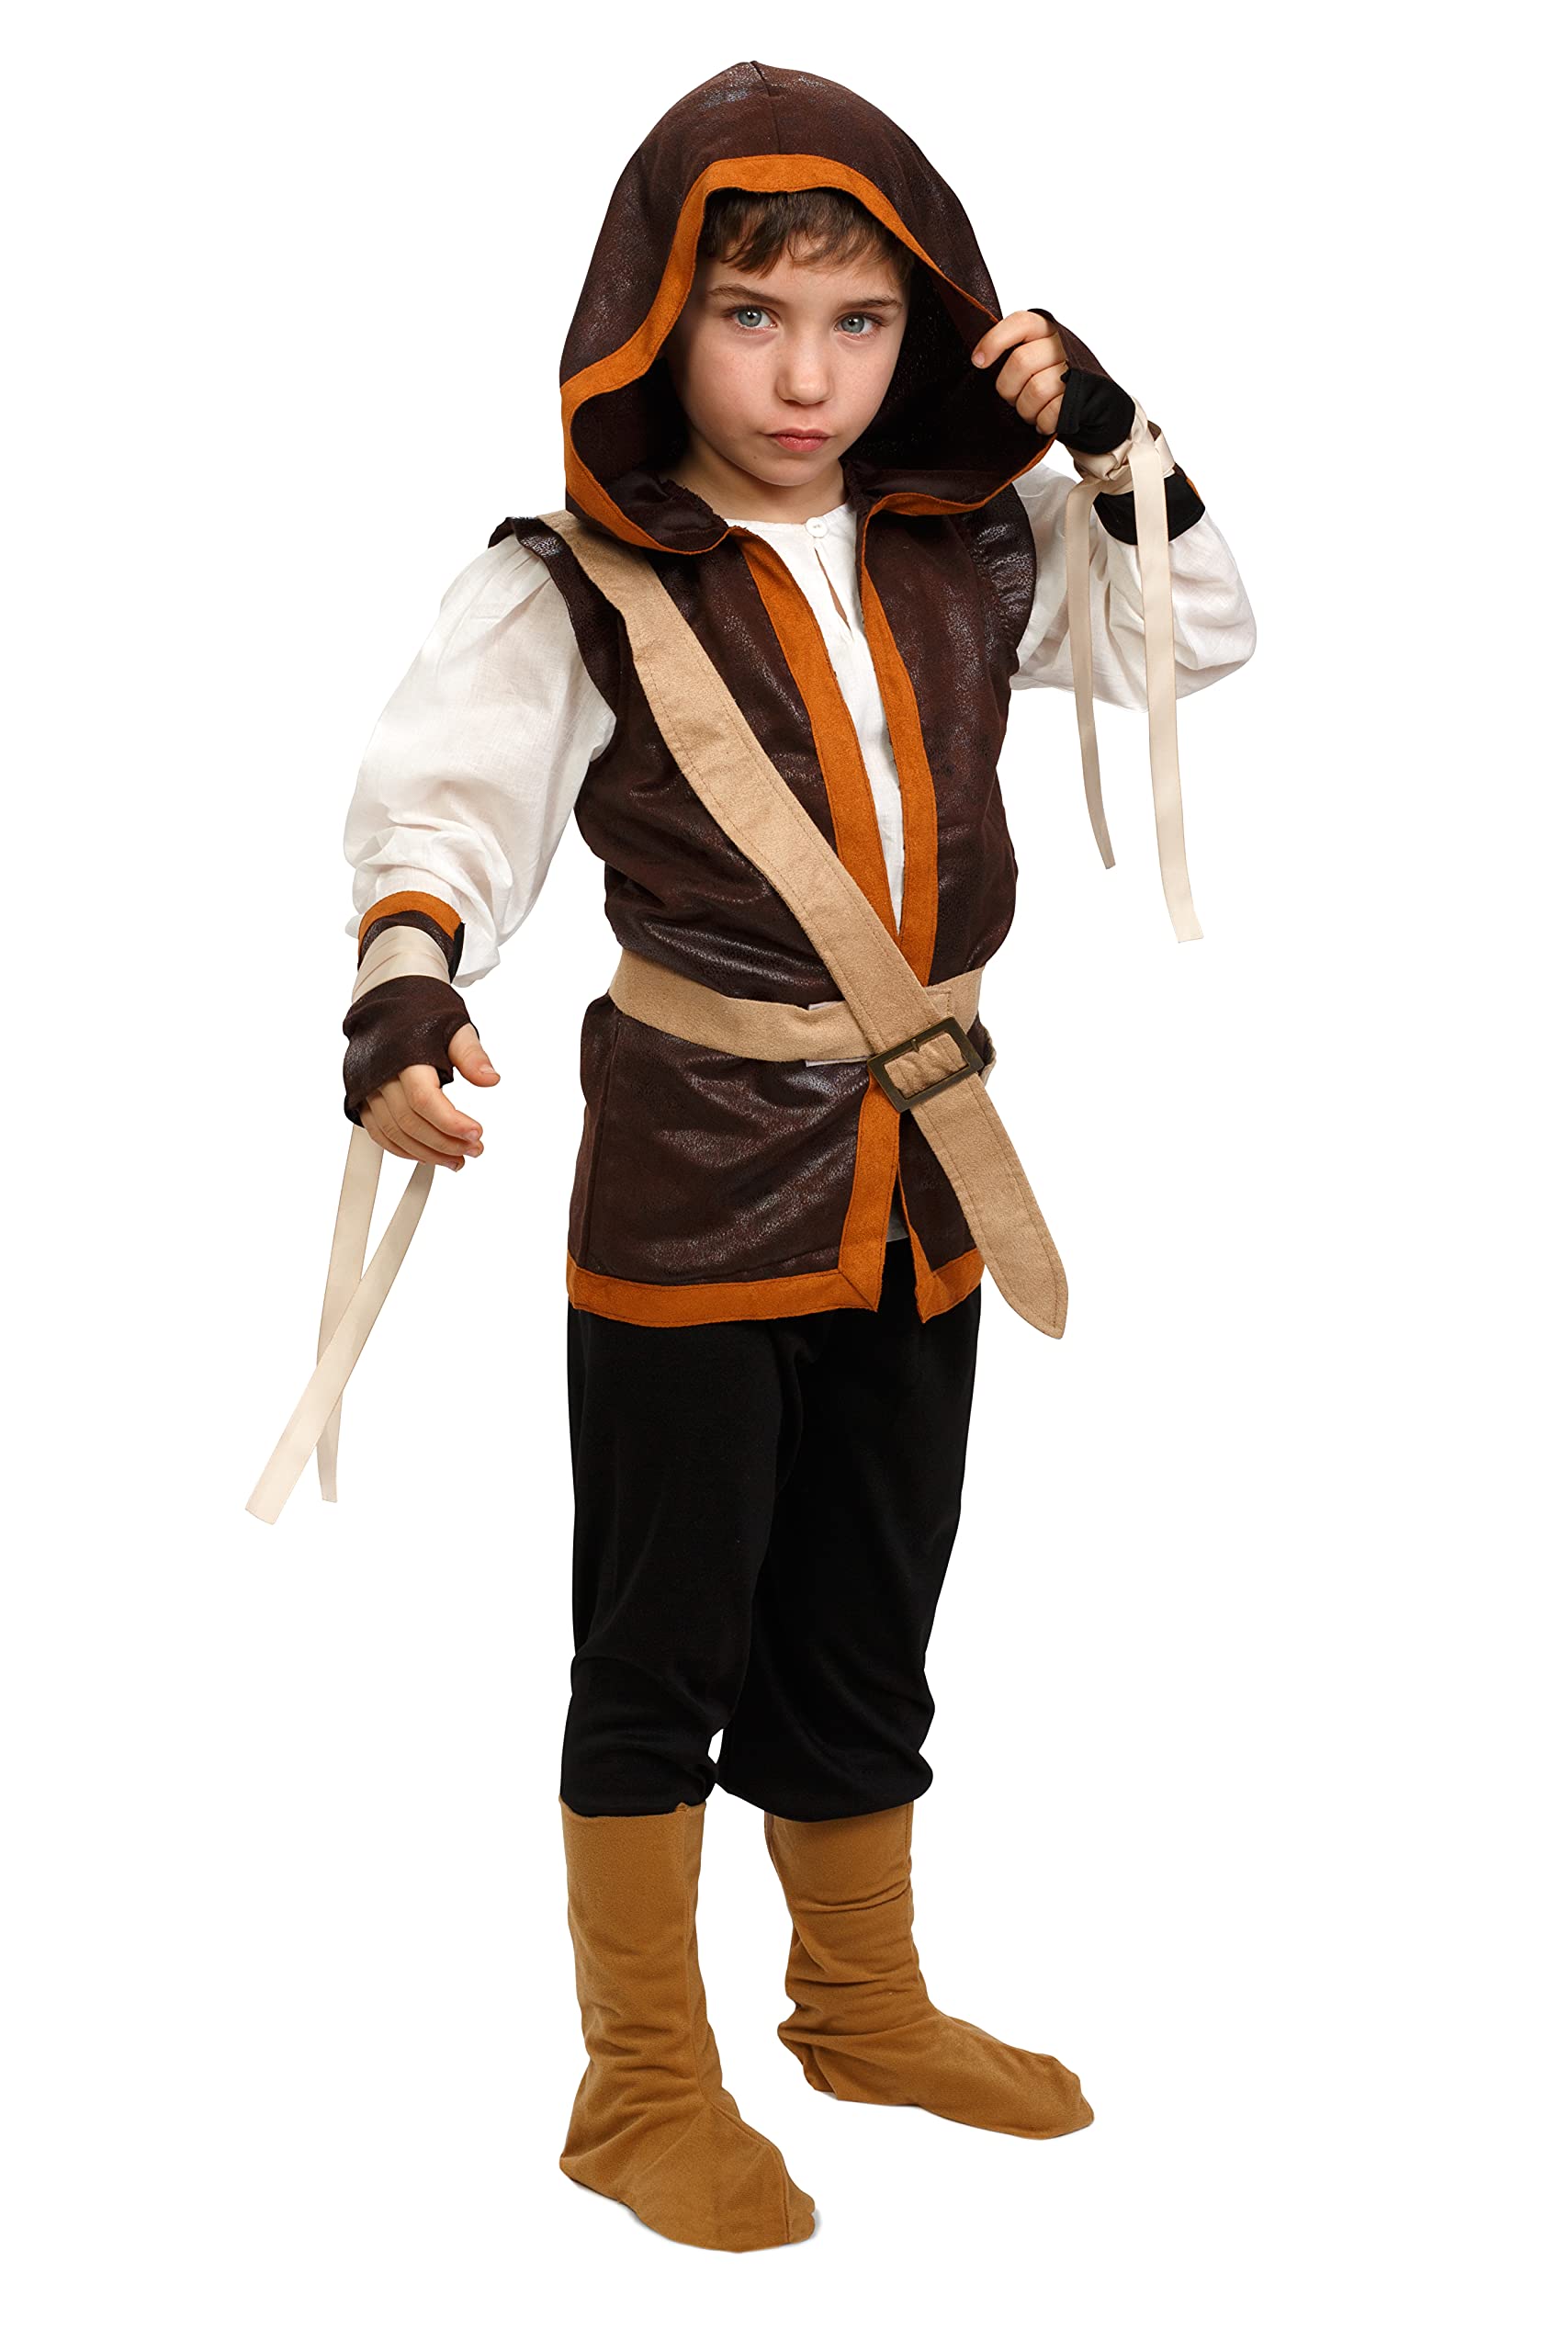 Dress Up America Robin Hood Kostüm für Jungen – Renaissance-Bogenschützen-Kostüm für Kinder